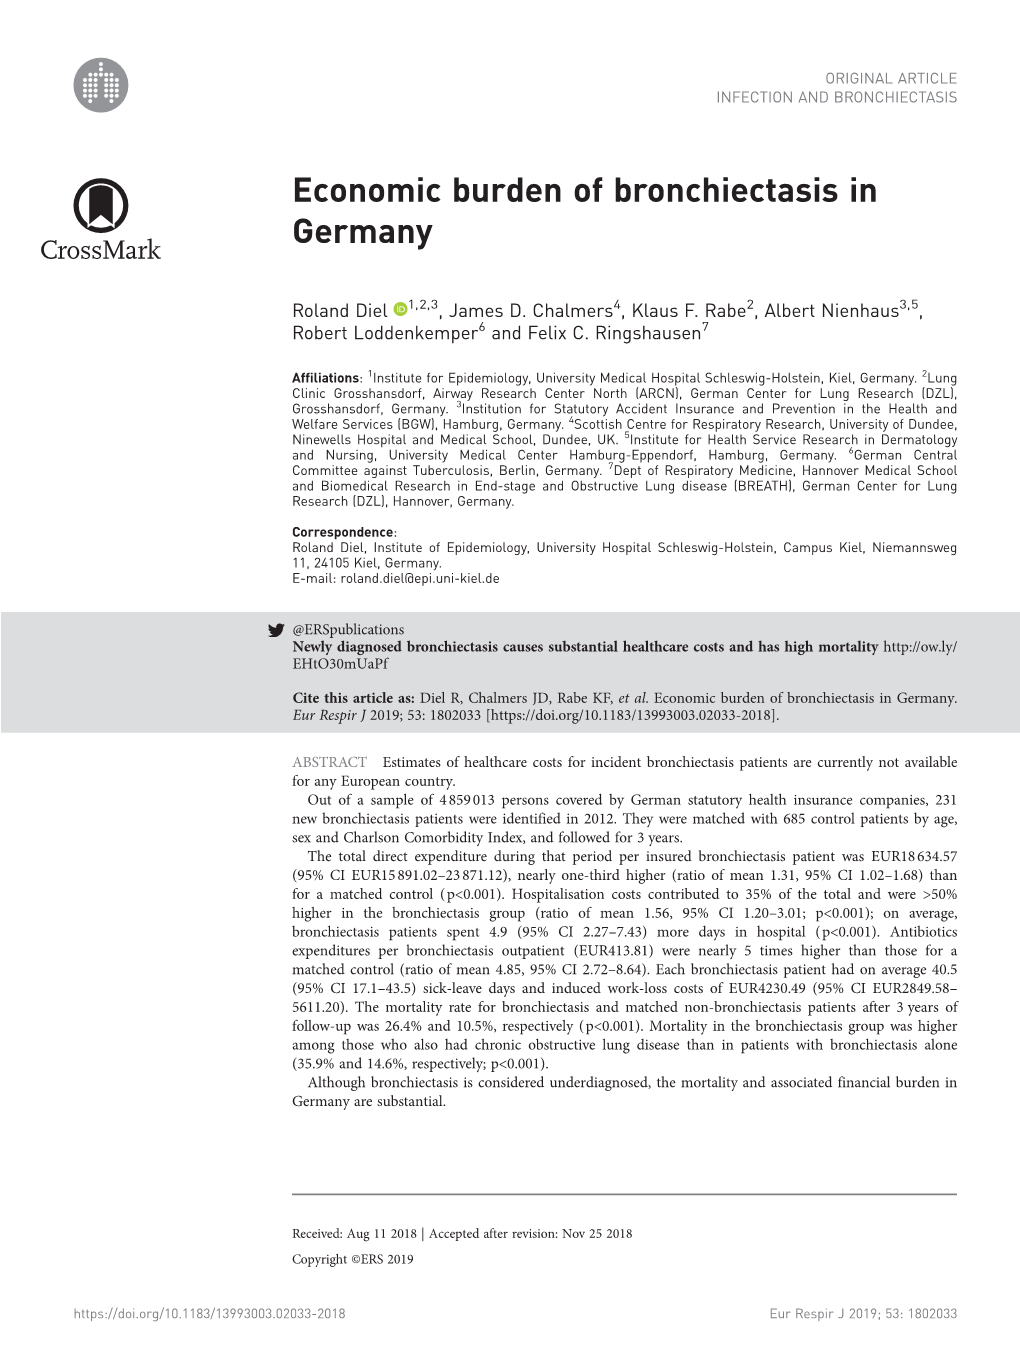 Economic Burden of Bronchiectasis in Germany